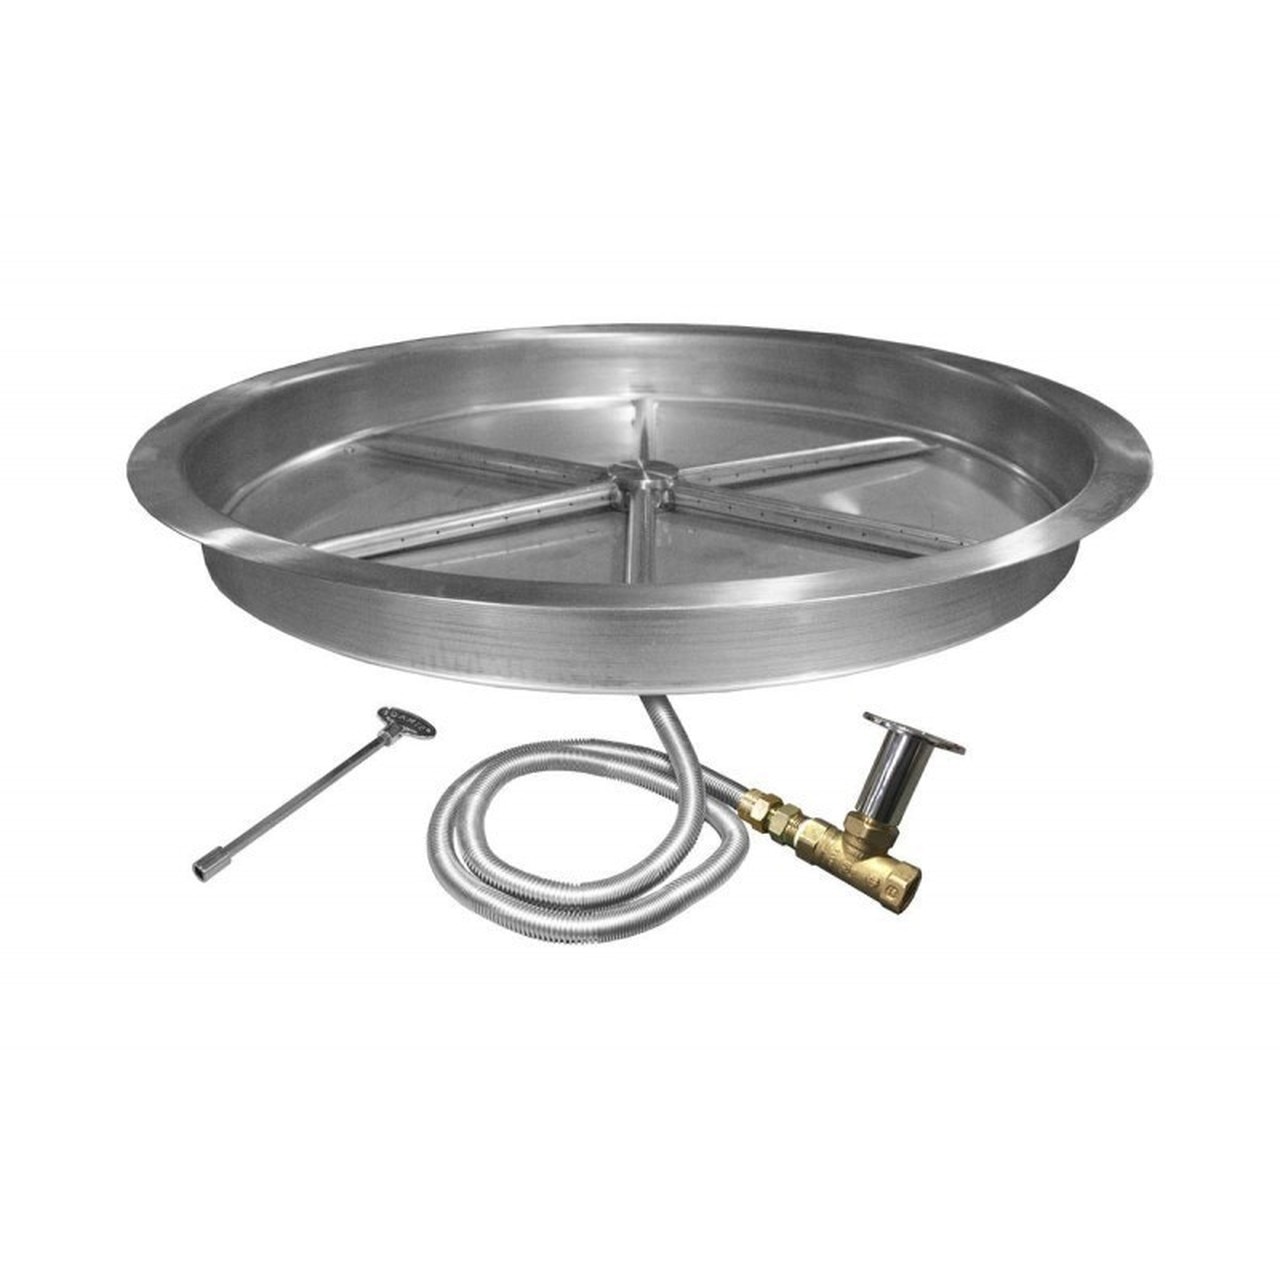 firegear match light gas fire pit burner kit round bowl pan 33 inch c=2